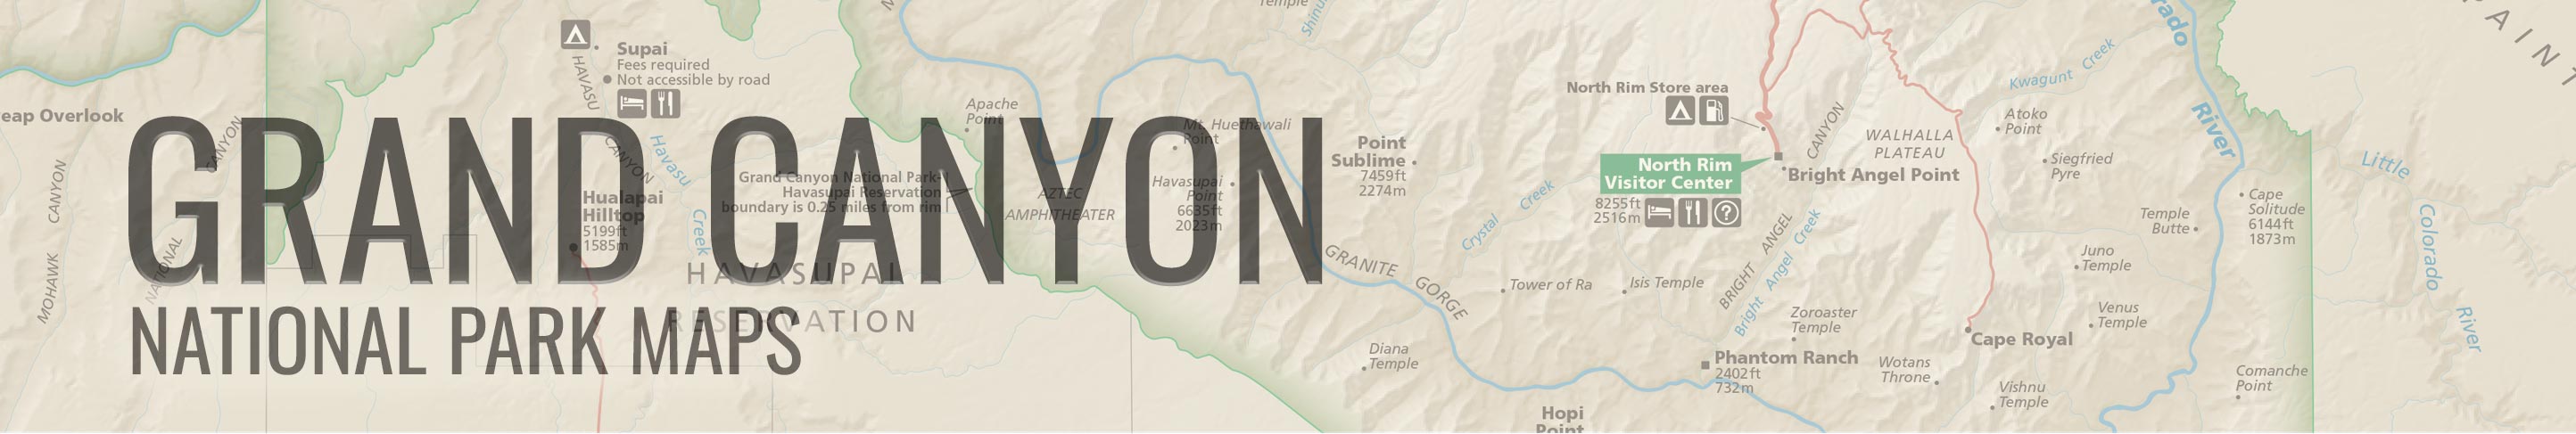 grand-canyon-national-park-maps-header